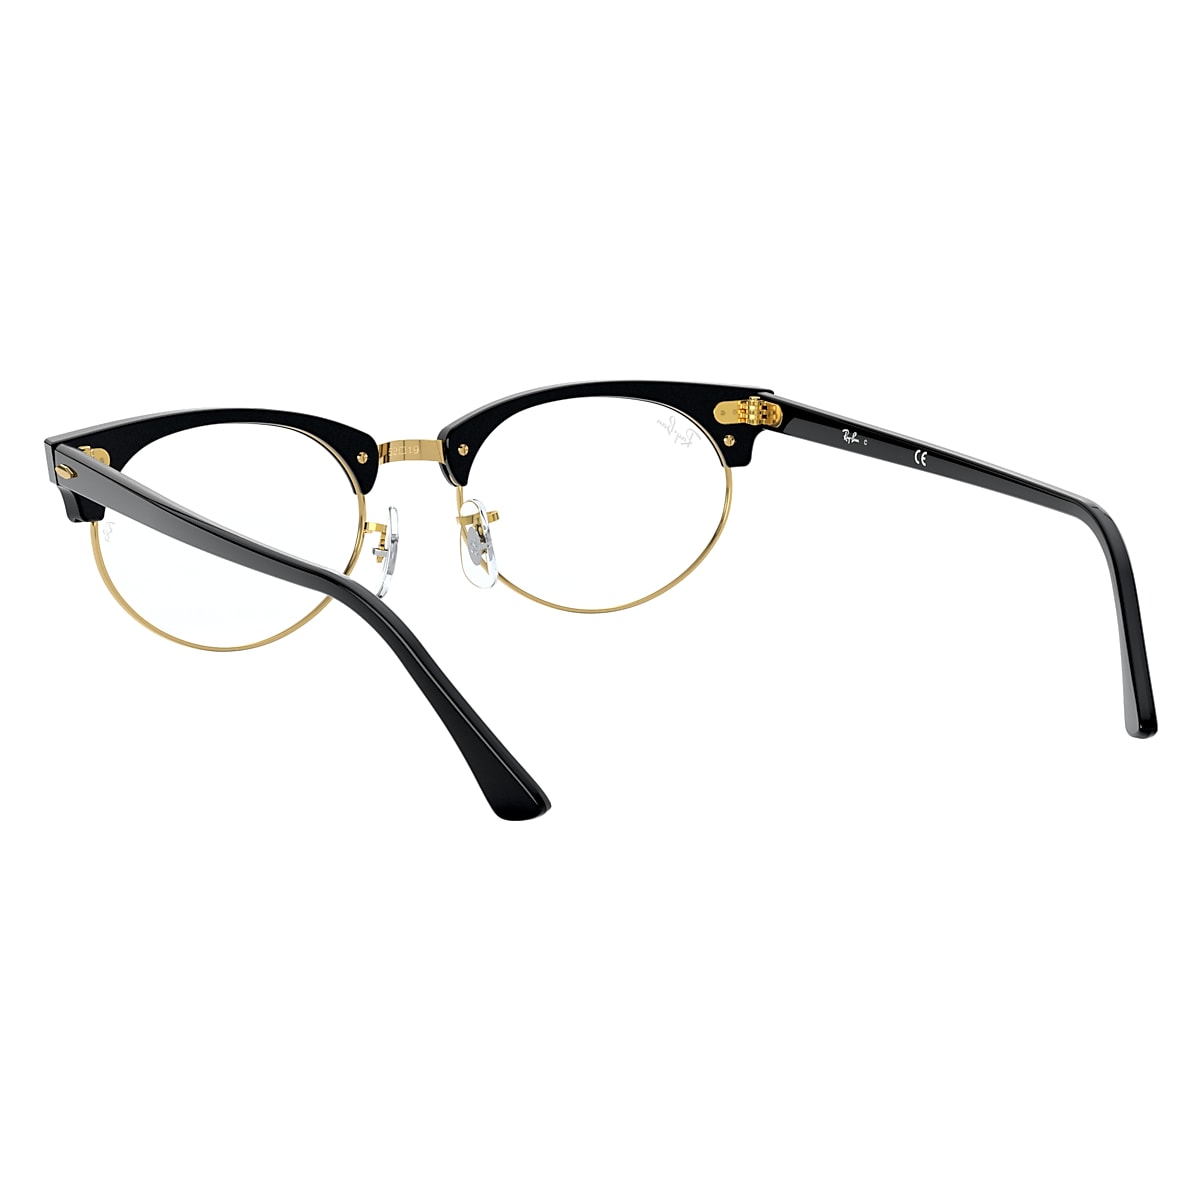 Ray Ban Clubmaster Oval Optics Black Eyeglasses Glasses Com Free Shipping